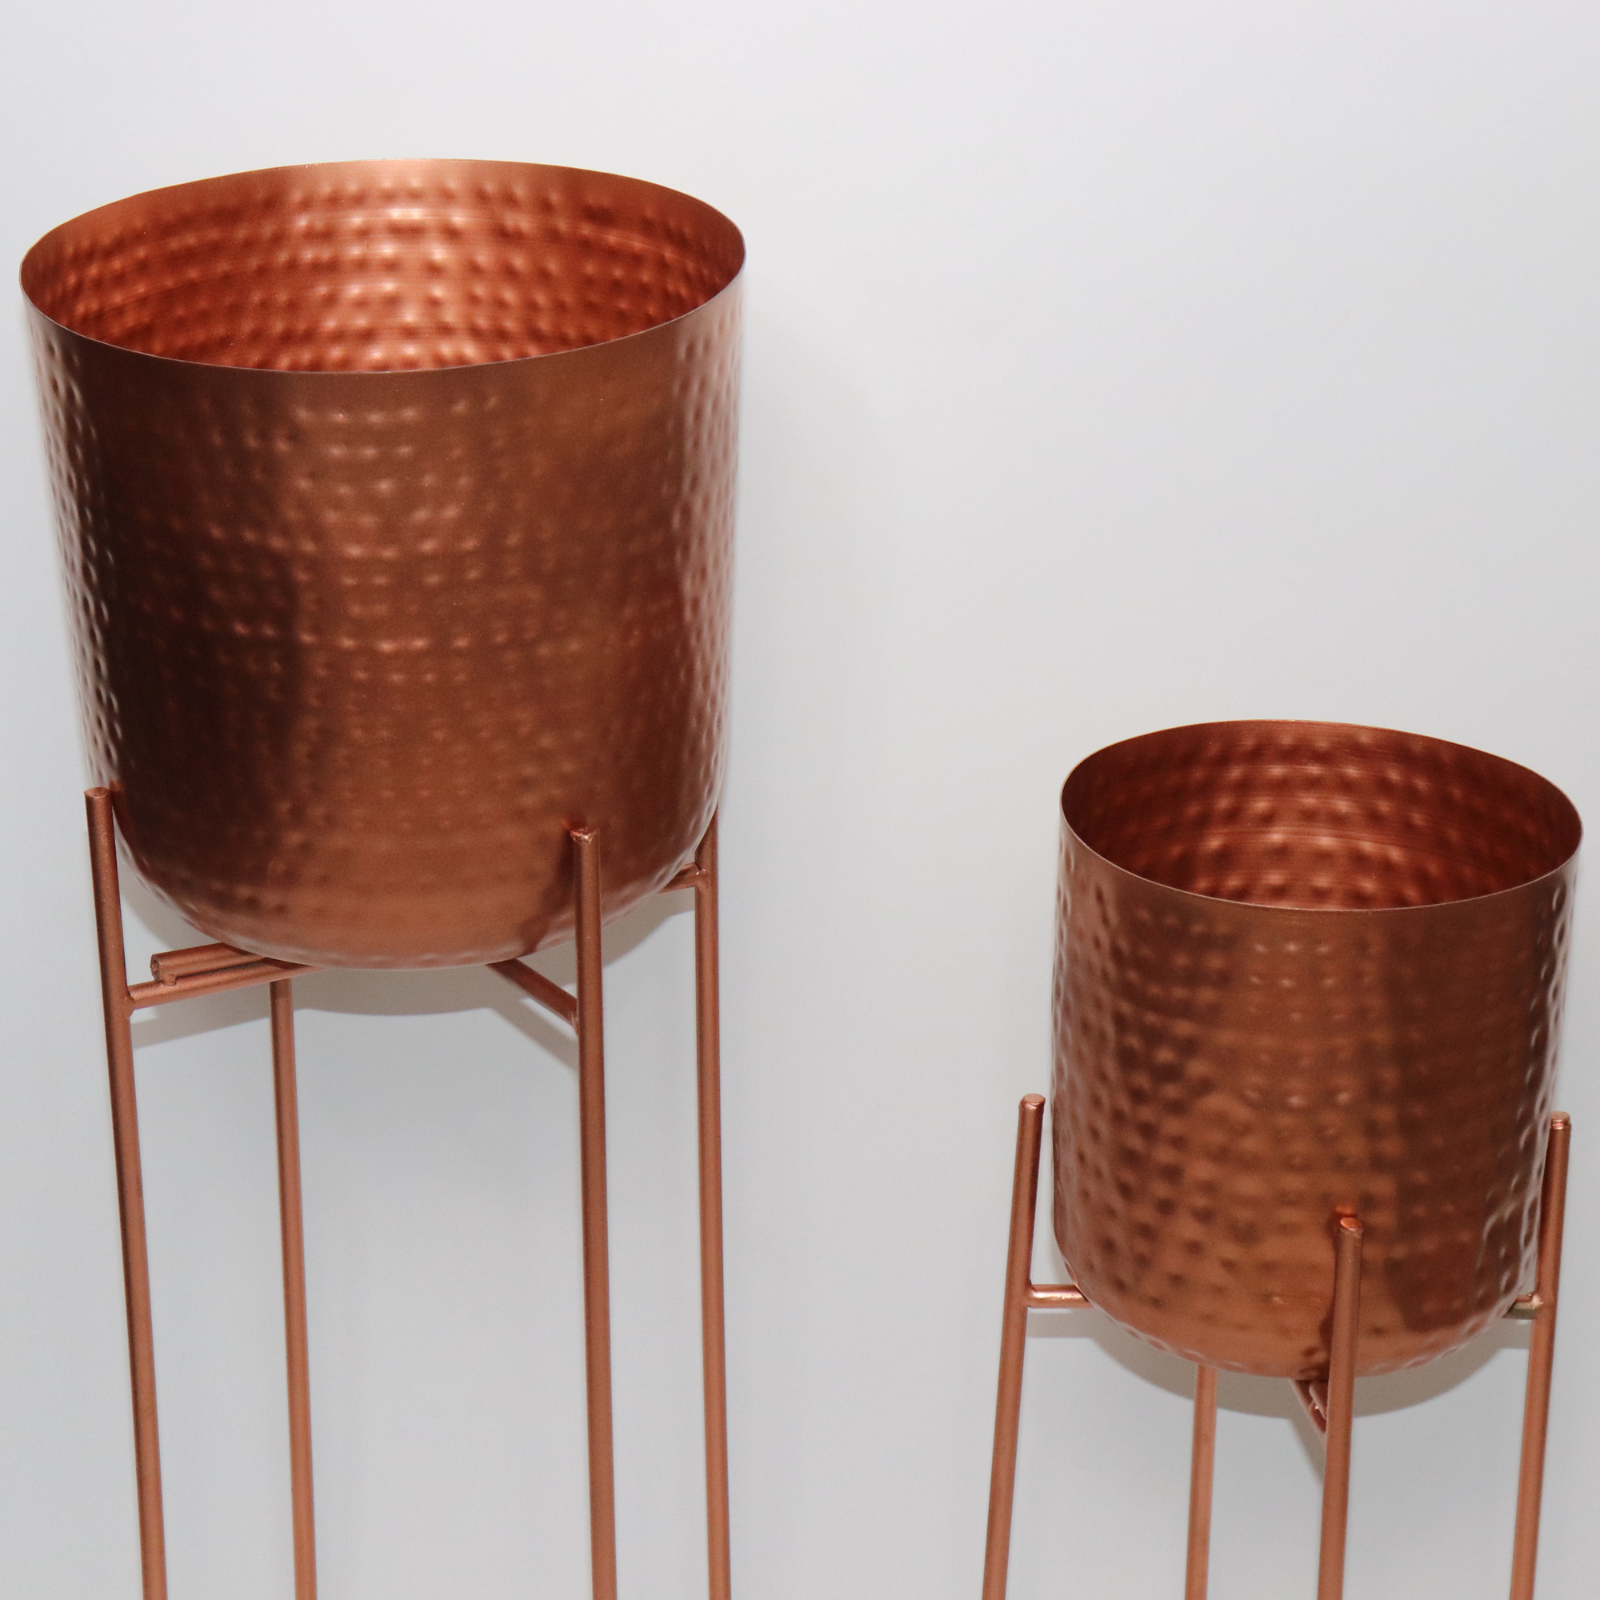 Copper Hammered Metal Planters (Set of 2) - LOOSEBUCKET